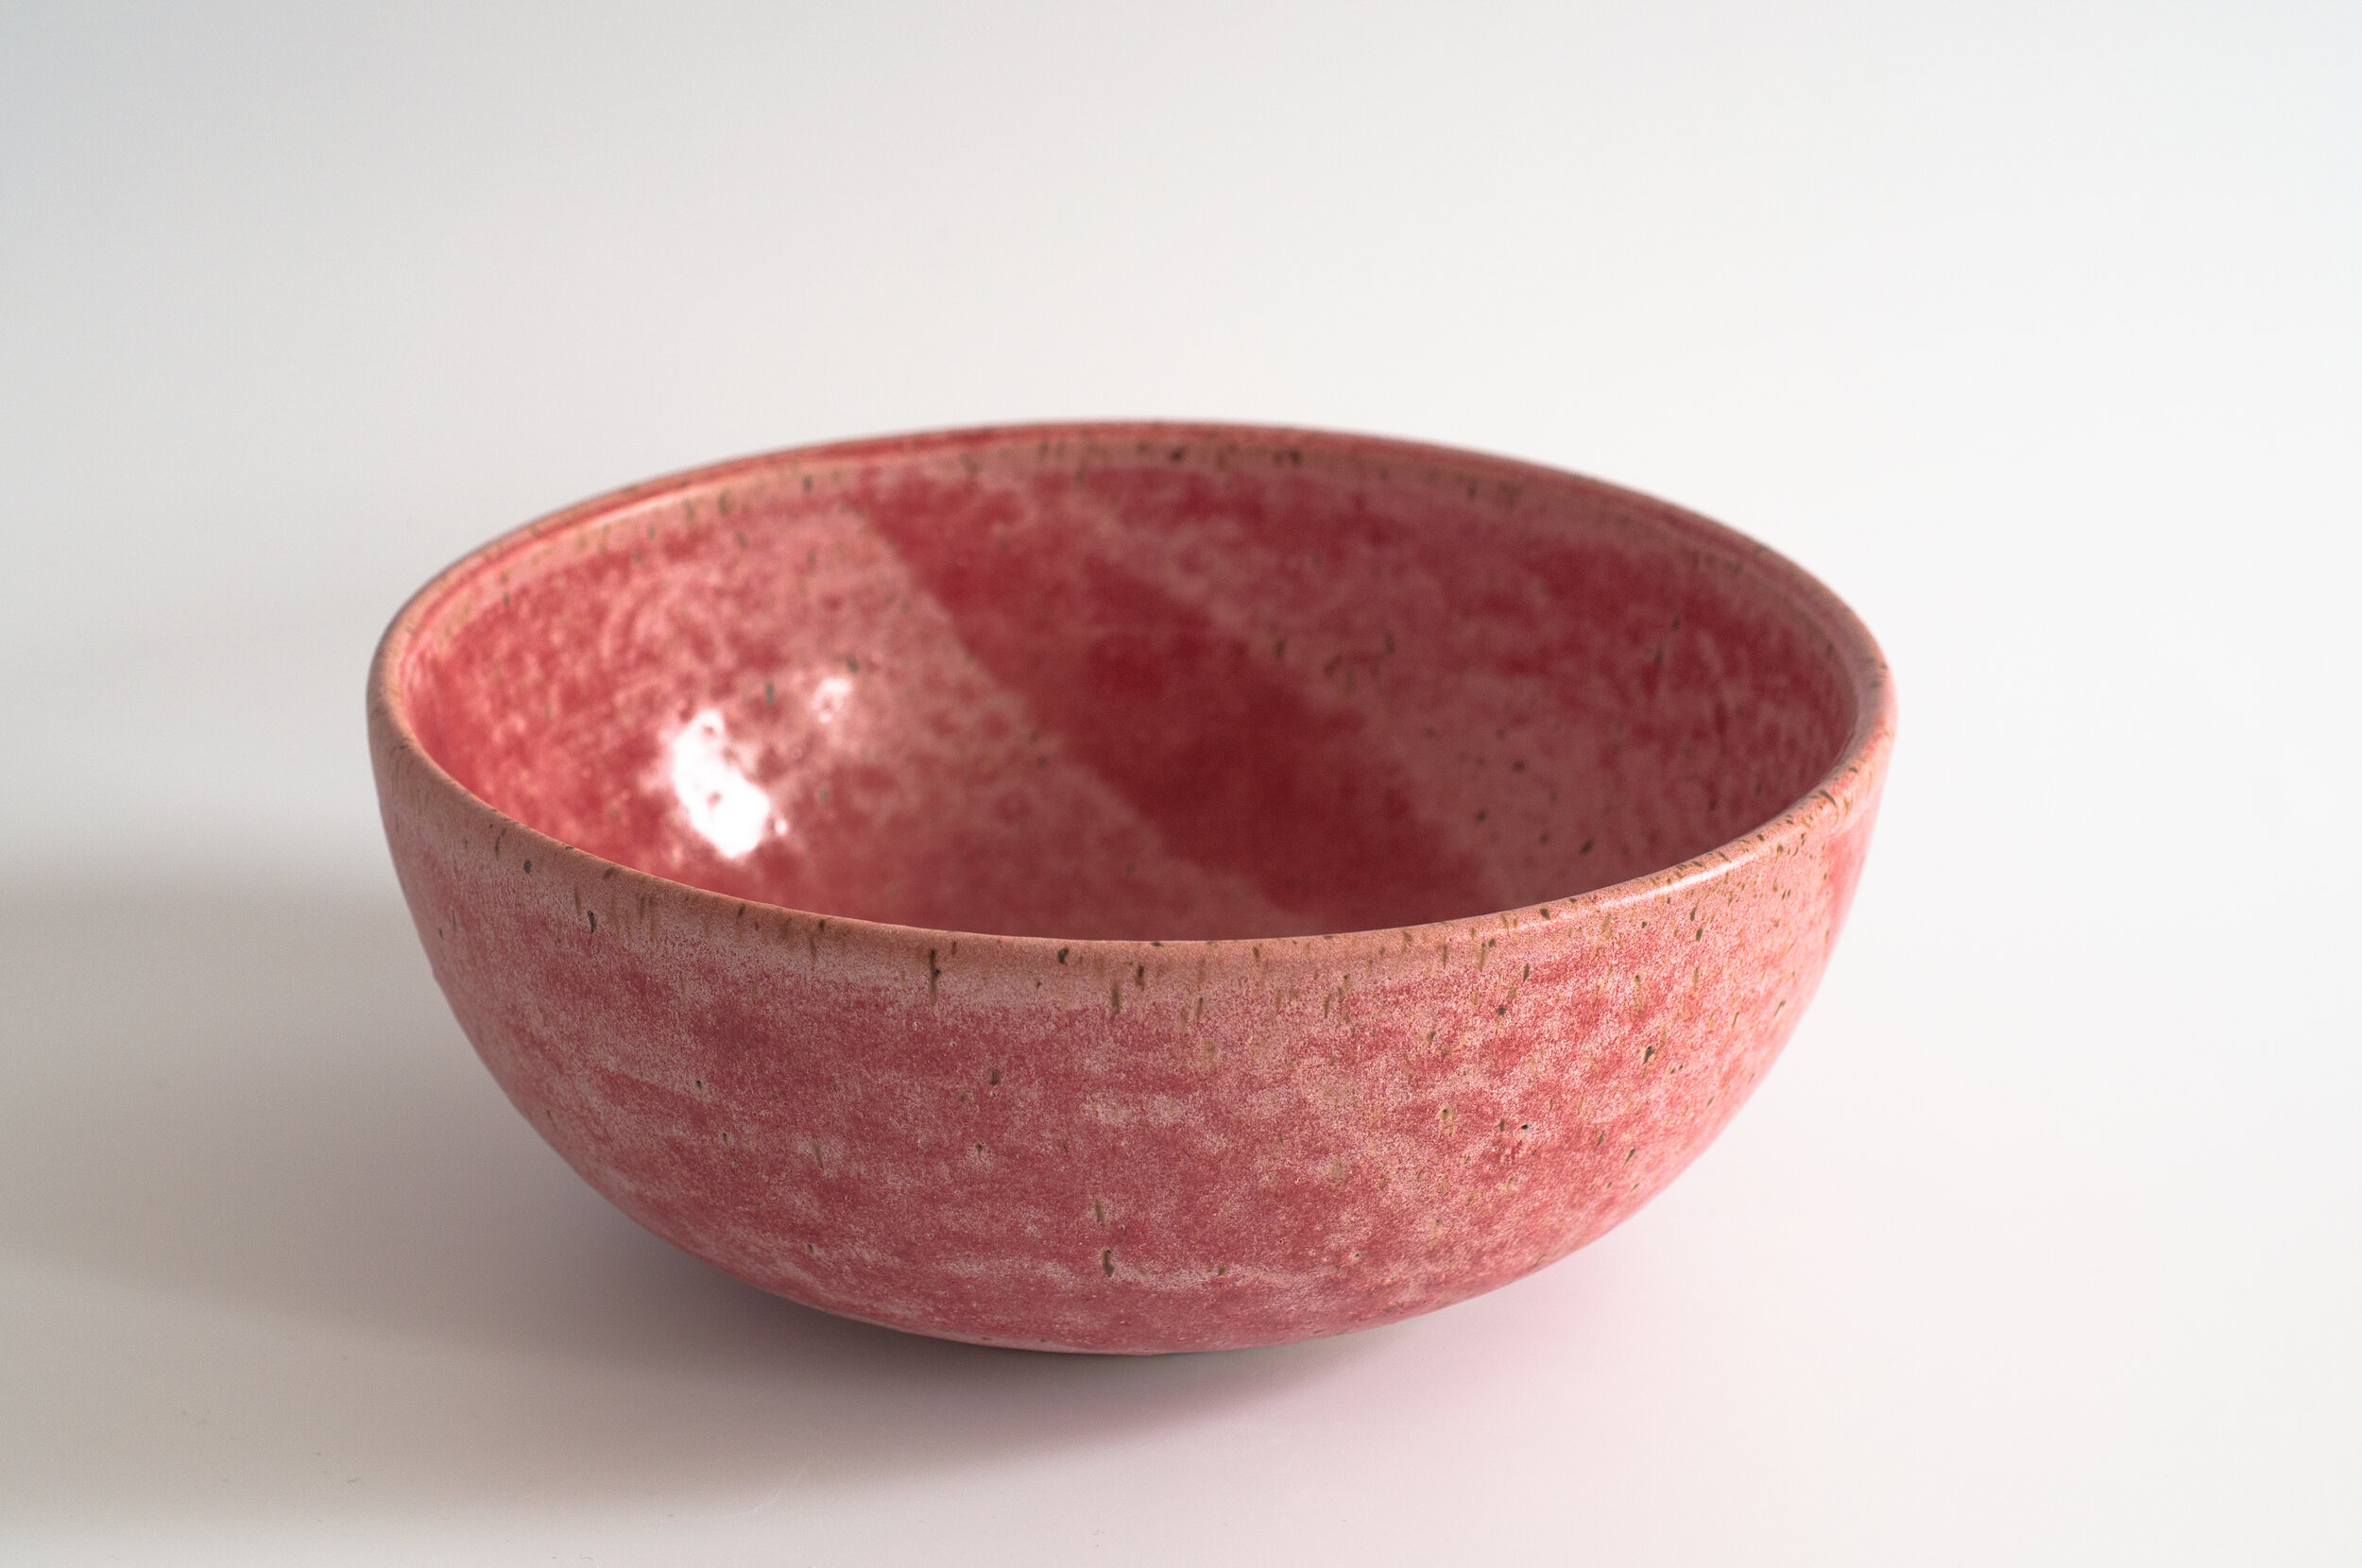 Large Ceramic Porcelain Mixing Bowl Set - The Bright Angle